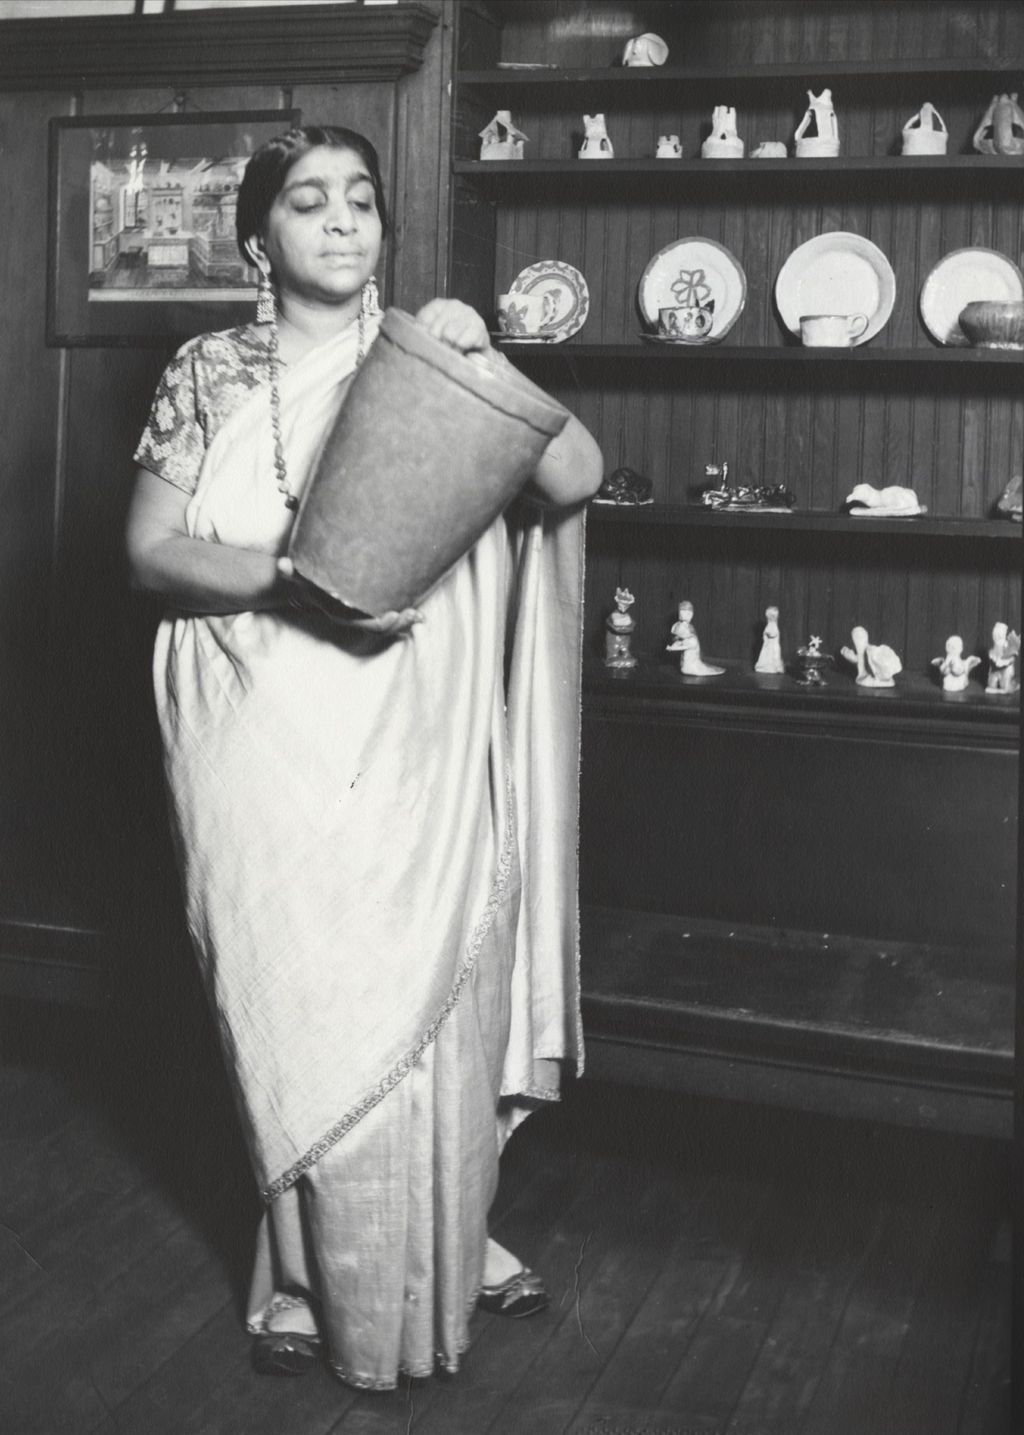 Indian poet and independence leader Sarojini Naidu holding a large ceramic jar at Hull-House